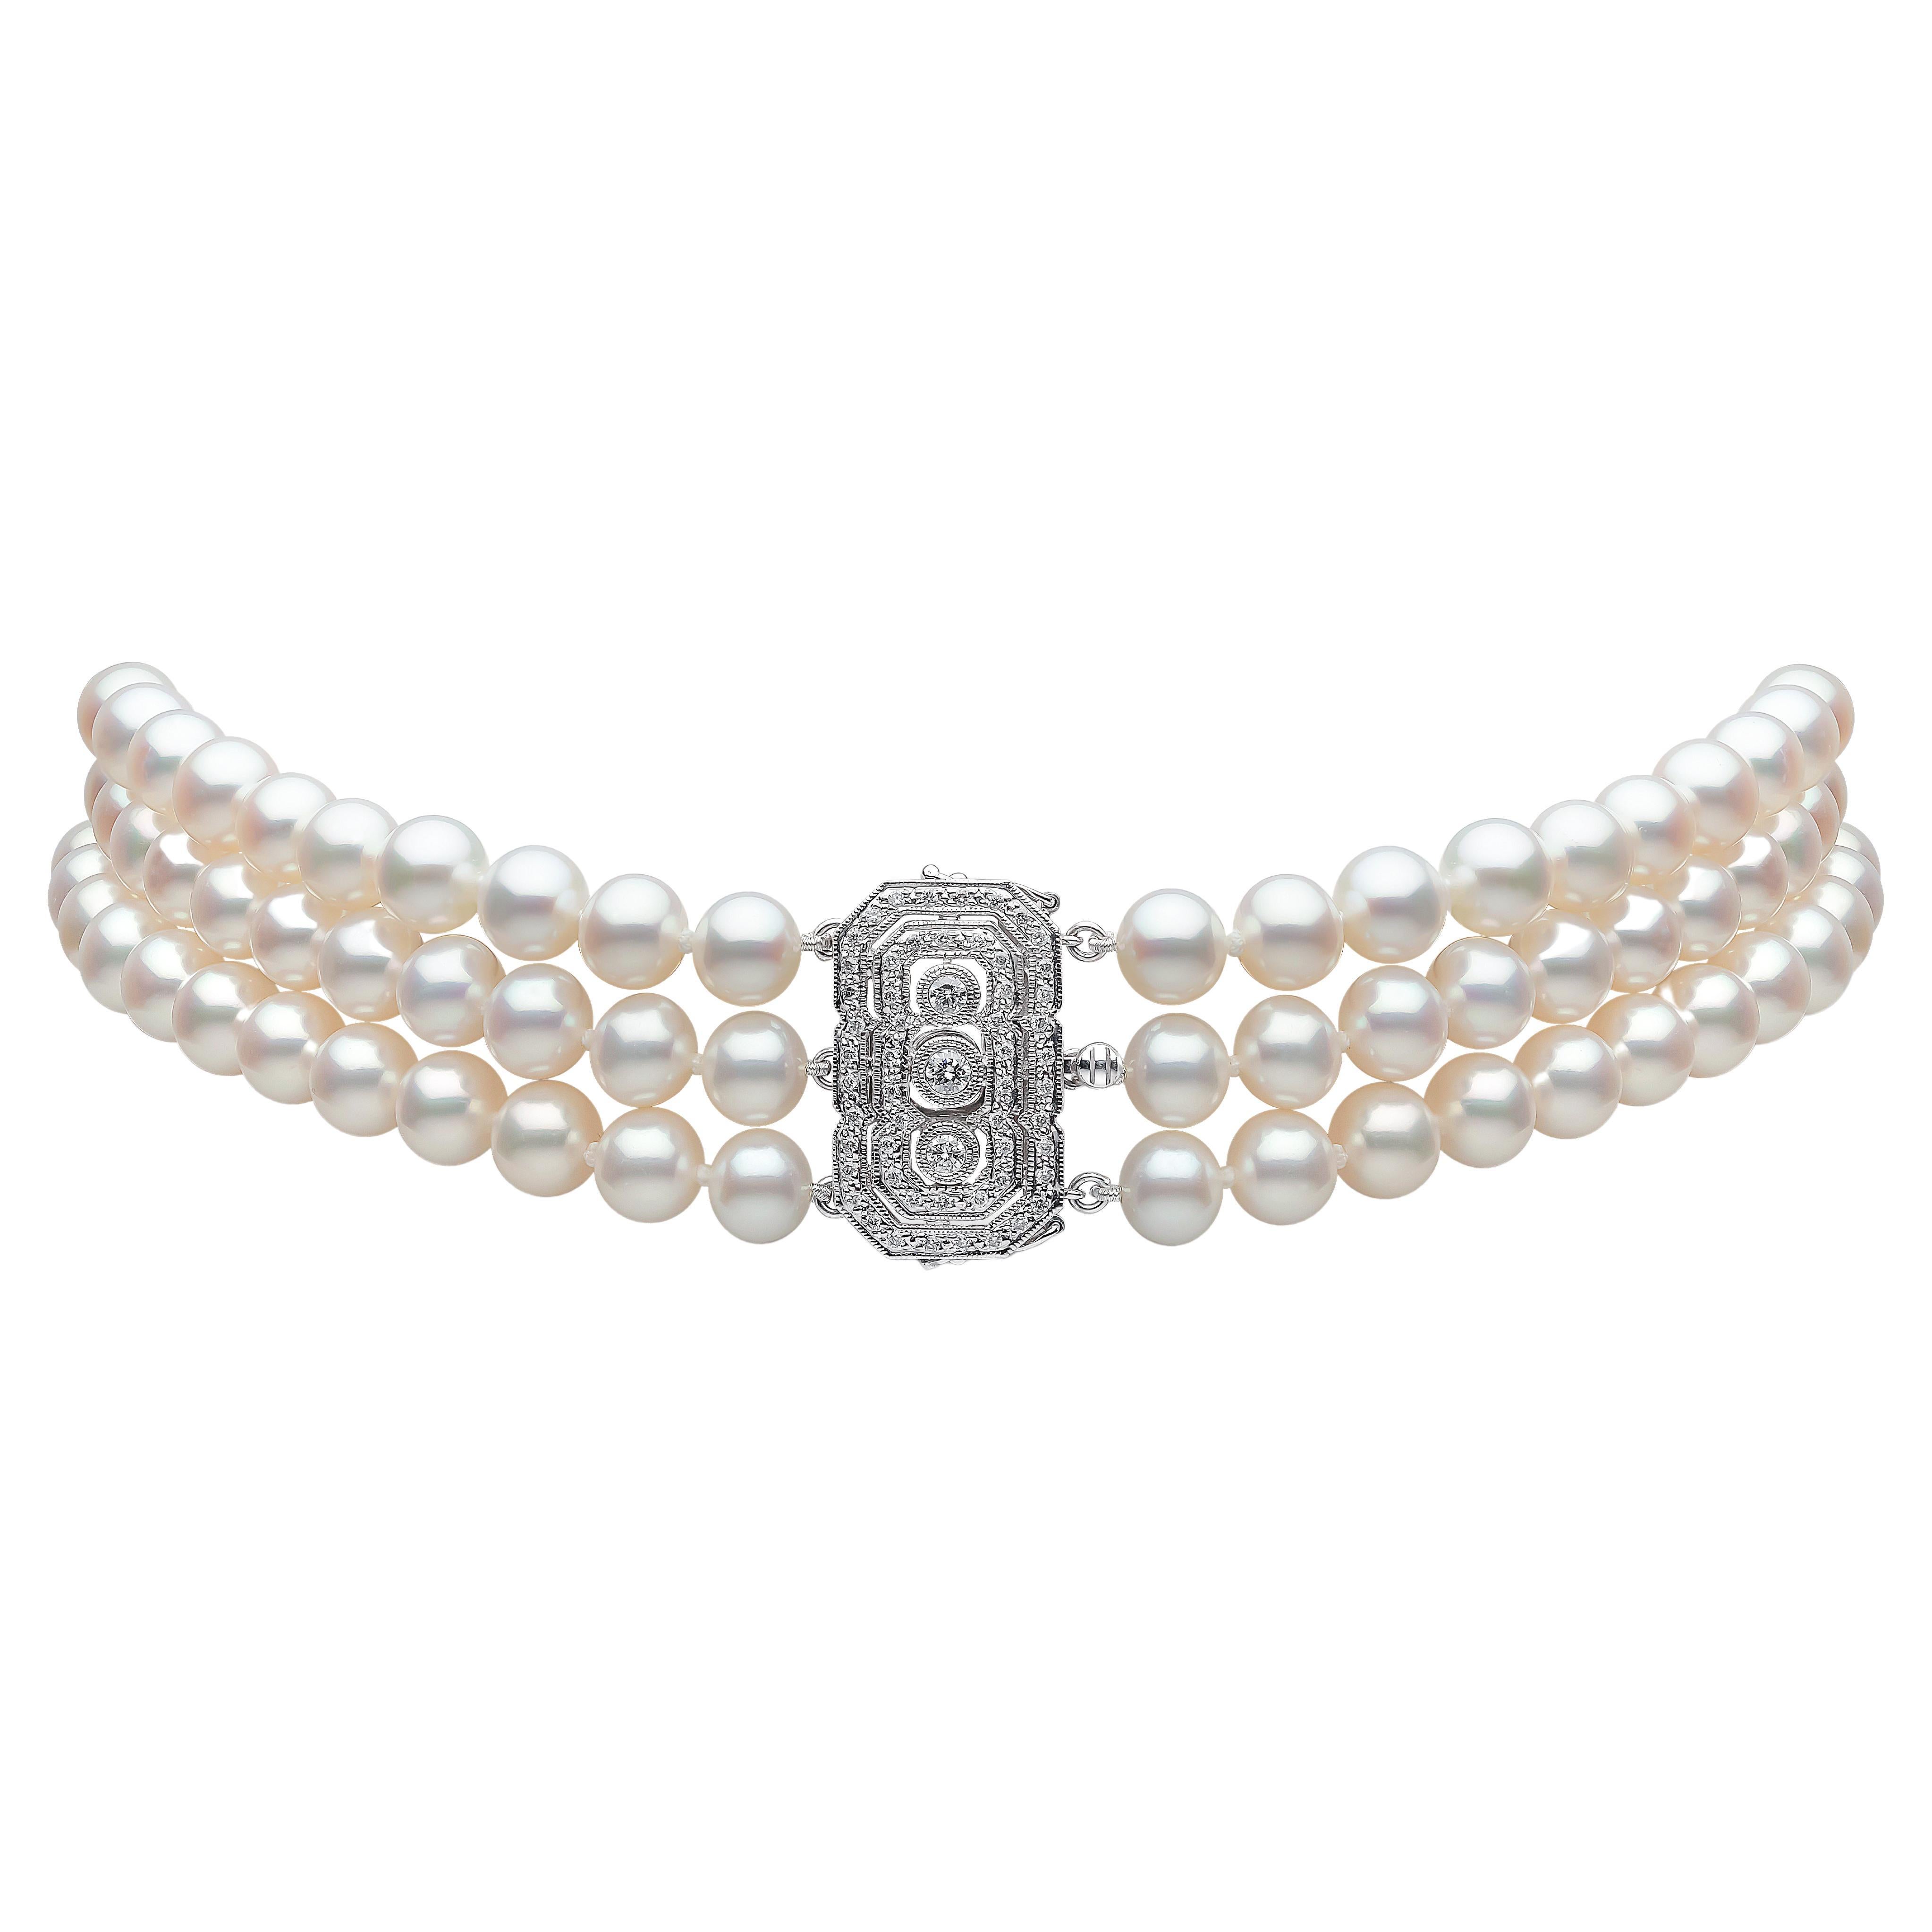 Yoko London Freshwater Pearl and Diamond Choker Necklace in 18K White Gold